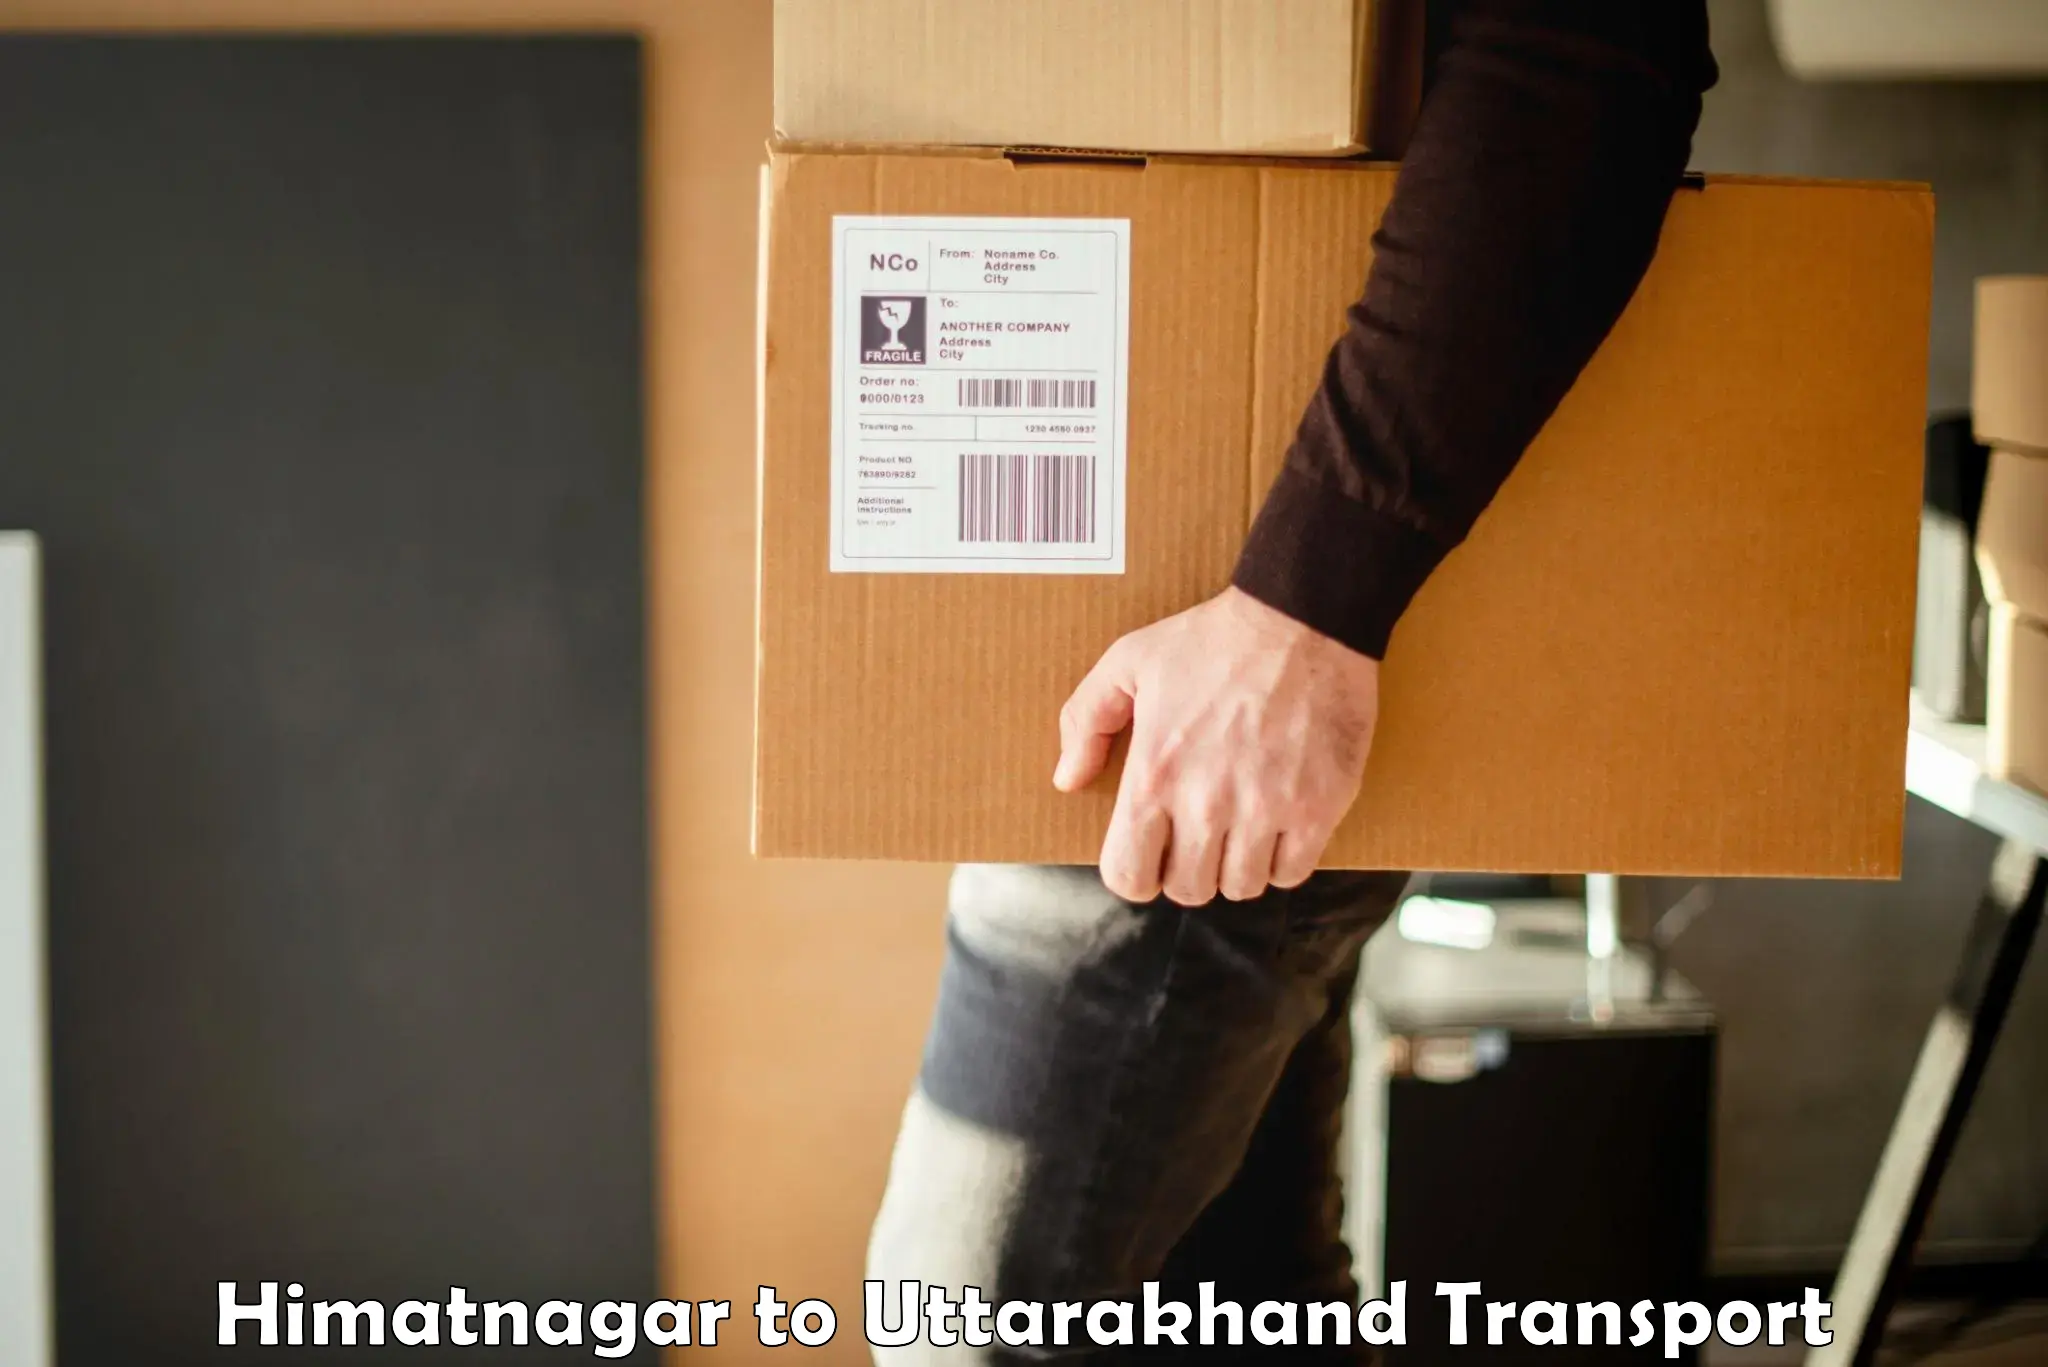 Delivery service Himatnagar to Haridwar